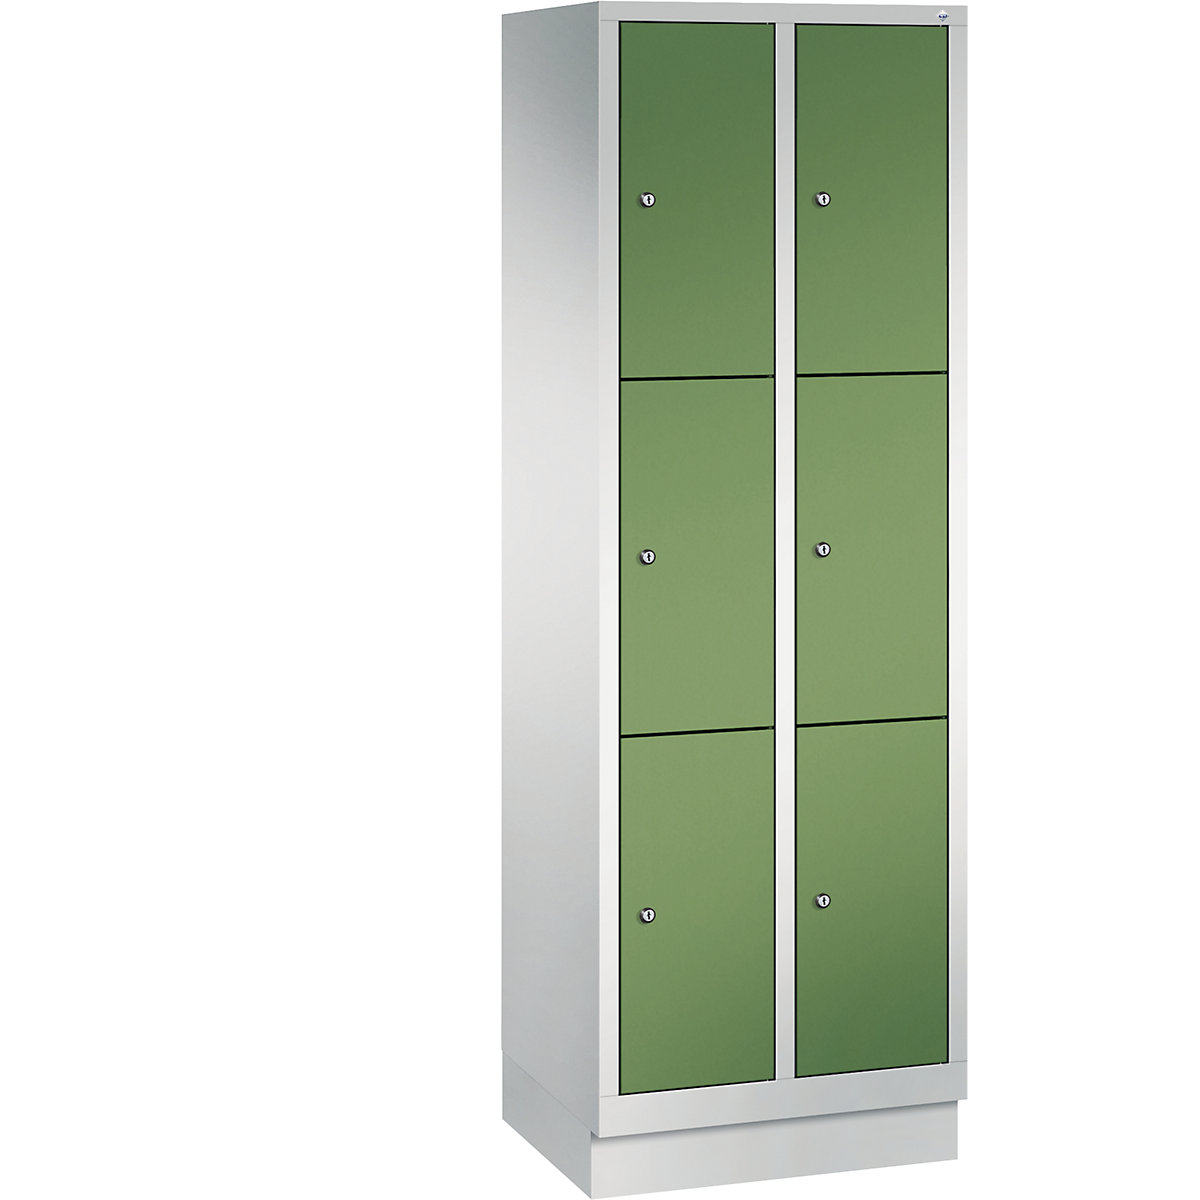 CLASSIC locker unit with plinth – C+P, 2 compartments, 3 shelf compartments each, compartment width 300 mm, light grey / reseda green-9